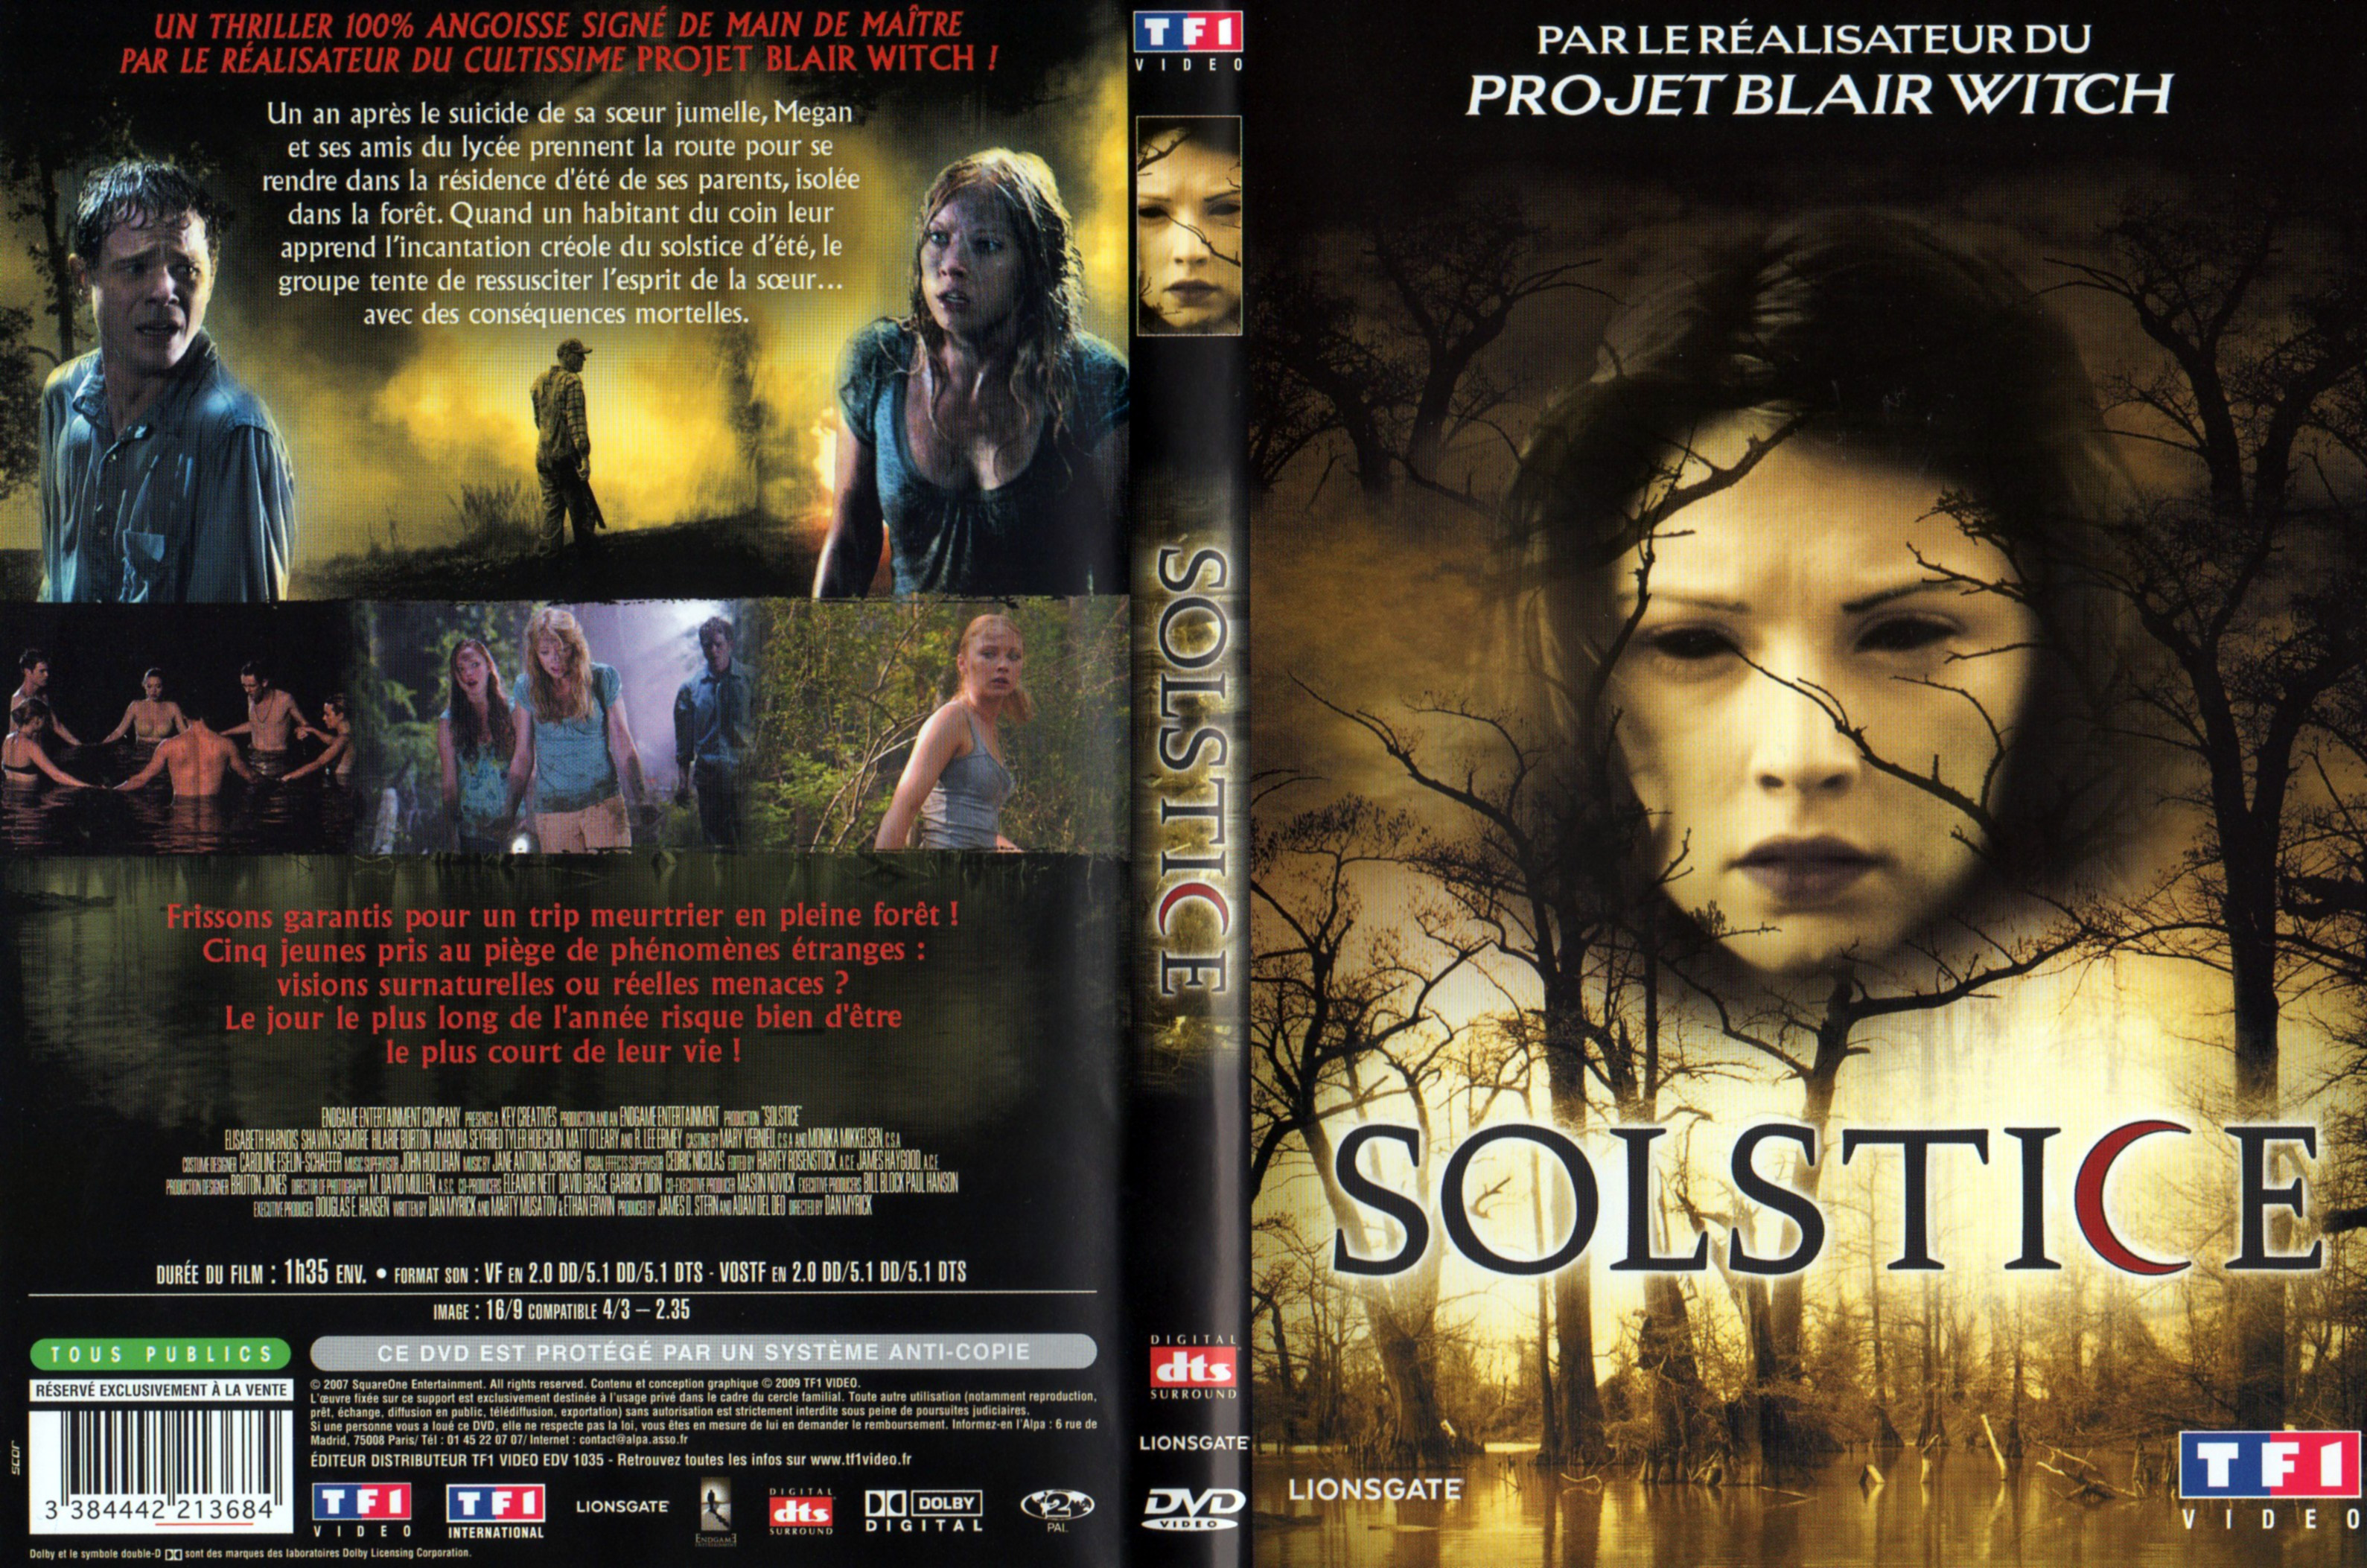 Jaquette DVD Solstice